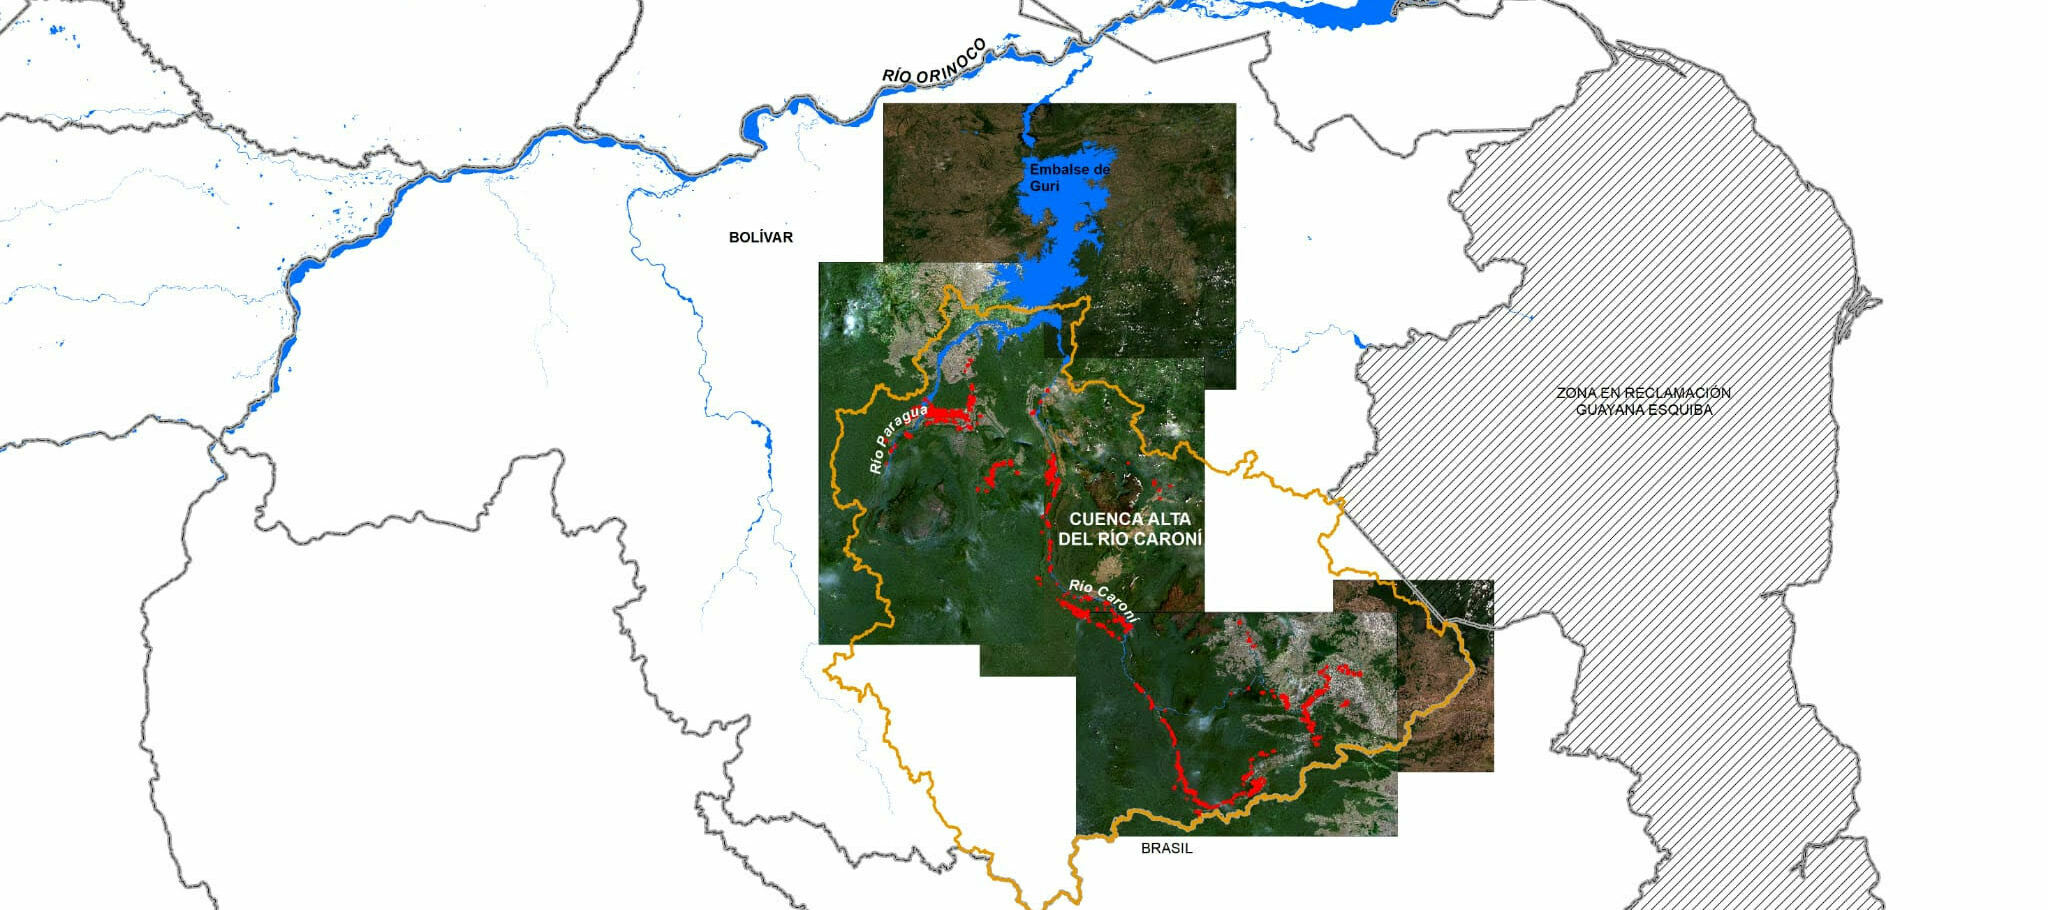 A virtual flyover of illegal mining activity in the Upper Caroní River Basin (Venezuelan Amazonia)